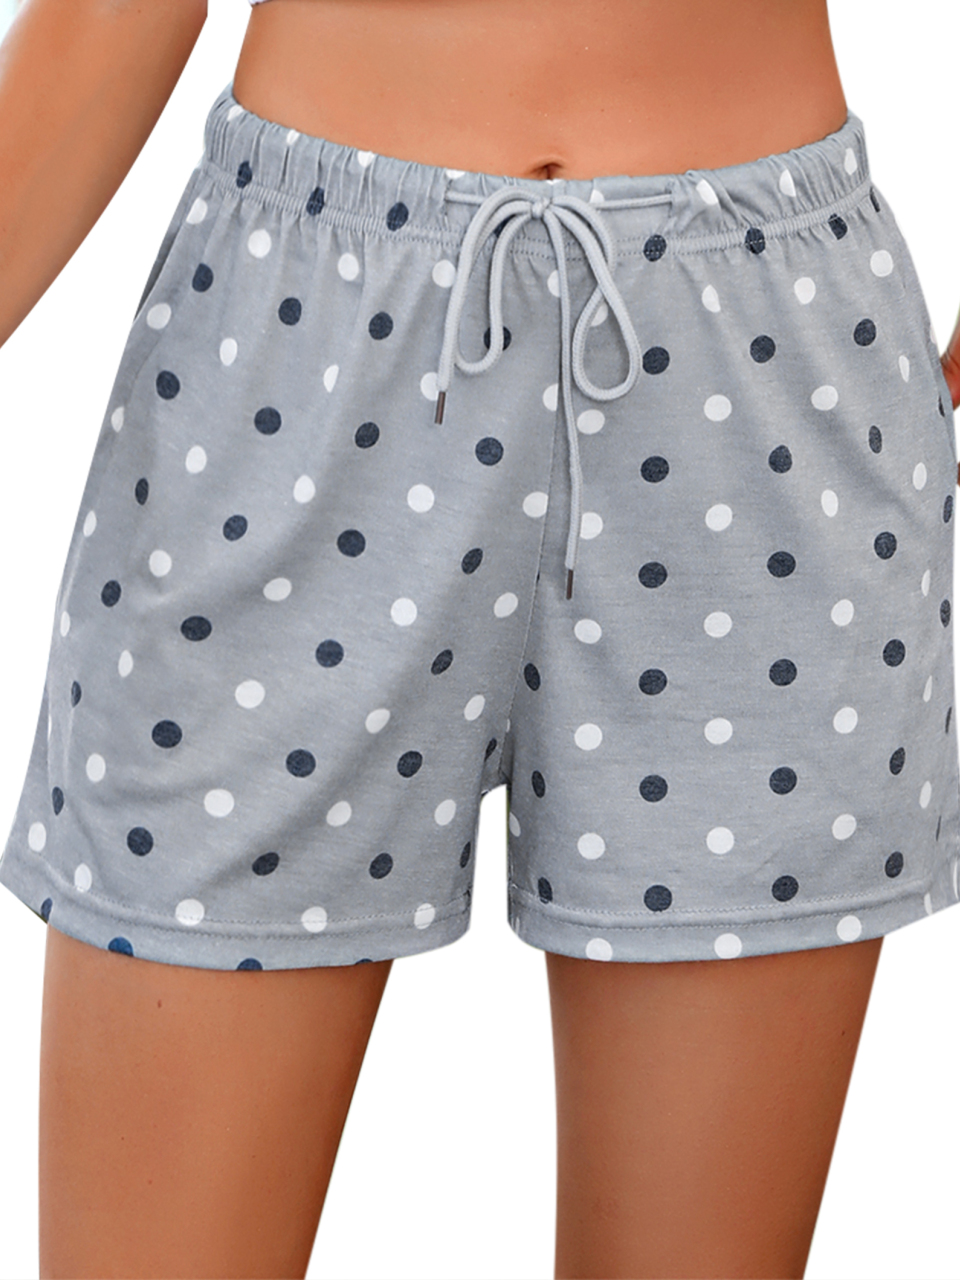 Unisex brand summer polka dot shorts